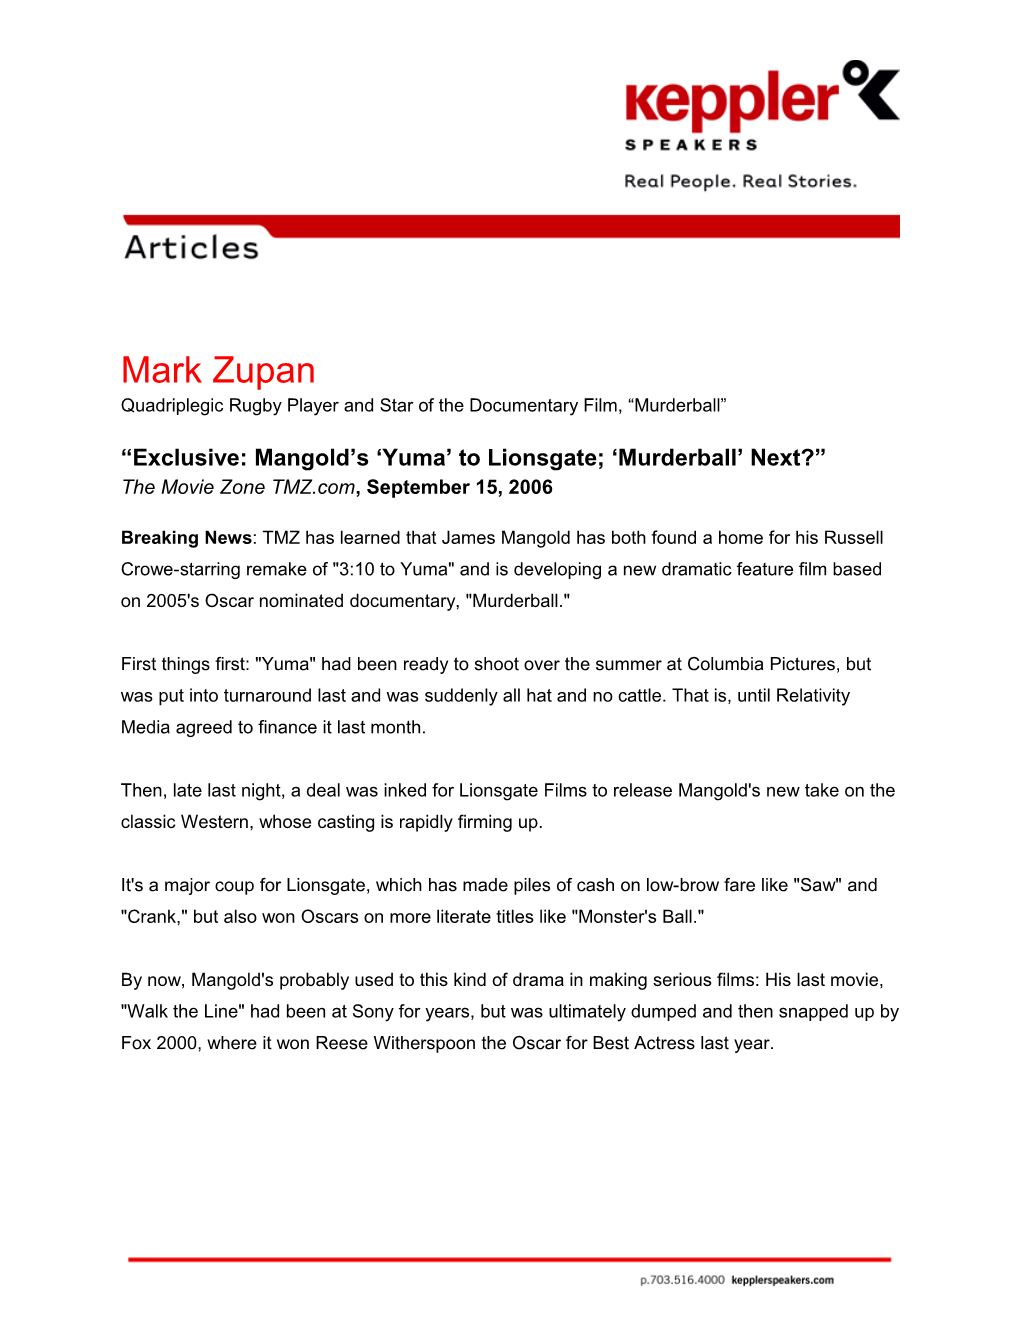 Mark Zupan Quadriplegic Rugby Player and Star of the Documentary Film, Murderball